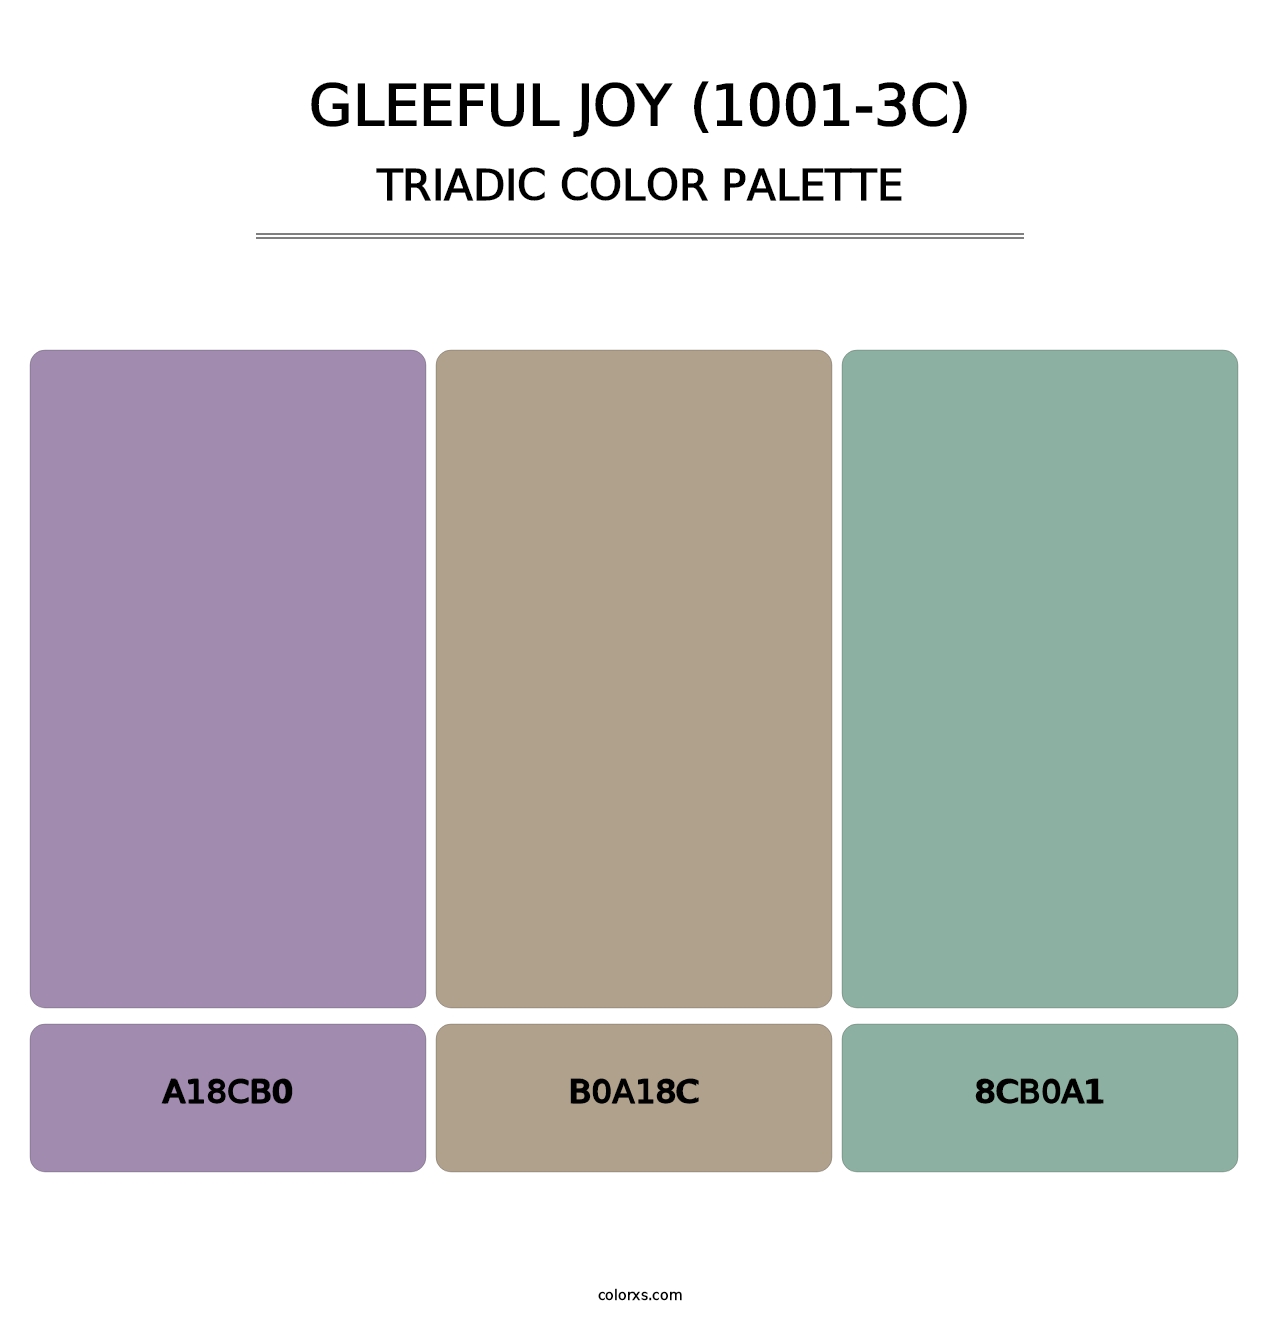 Gleeful Joy (1001-3C) - Triadic Color Palette